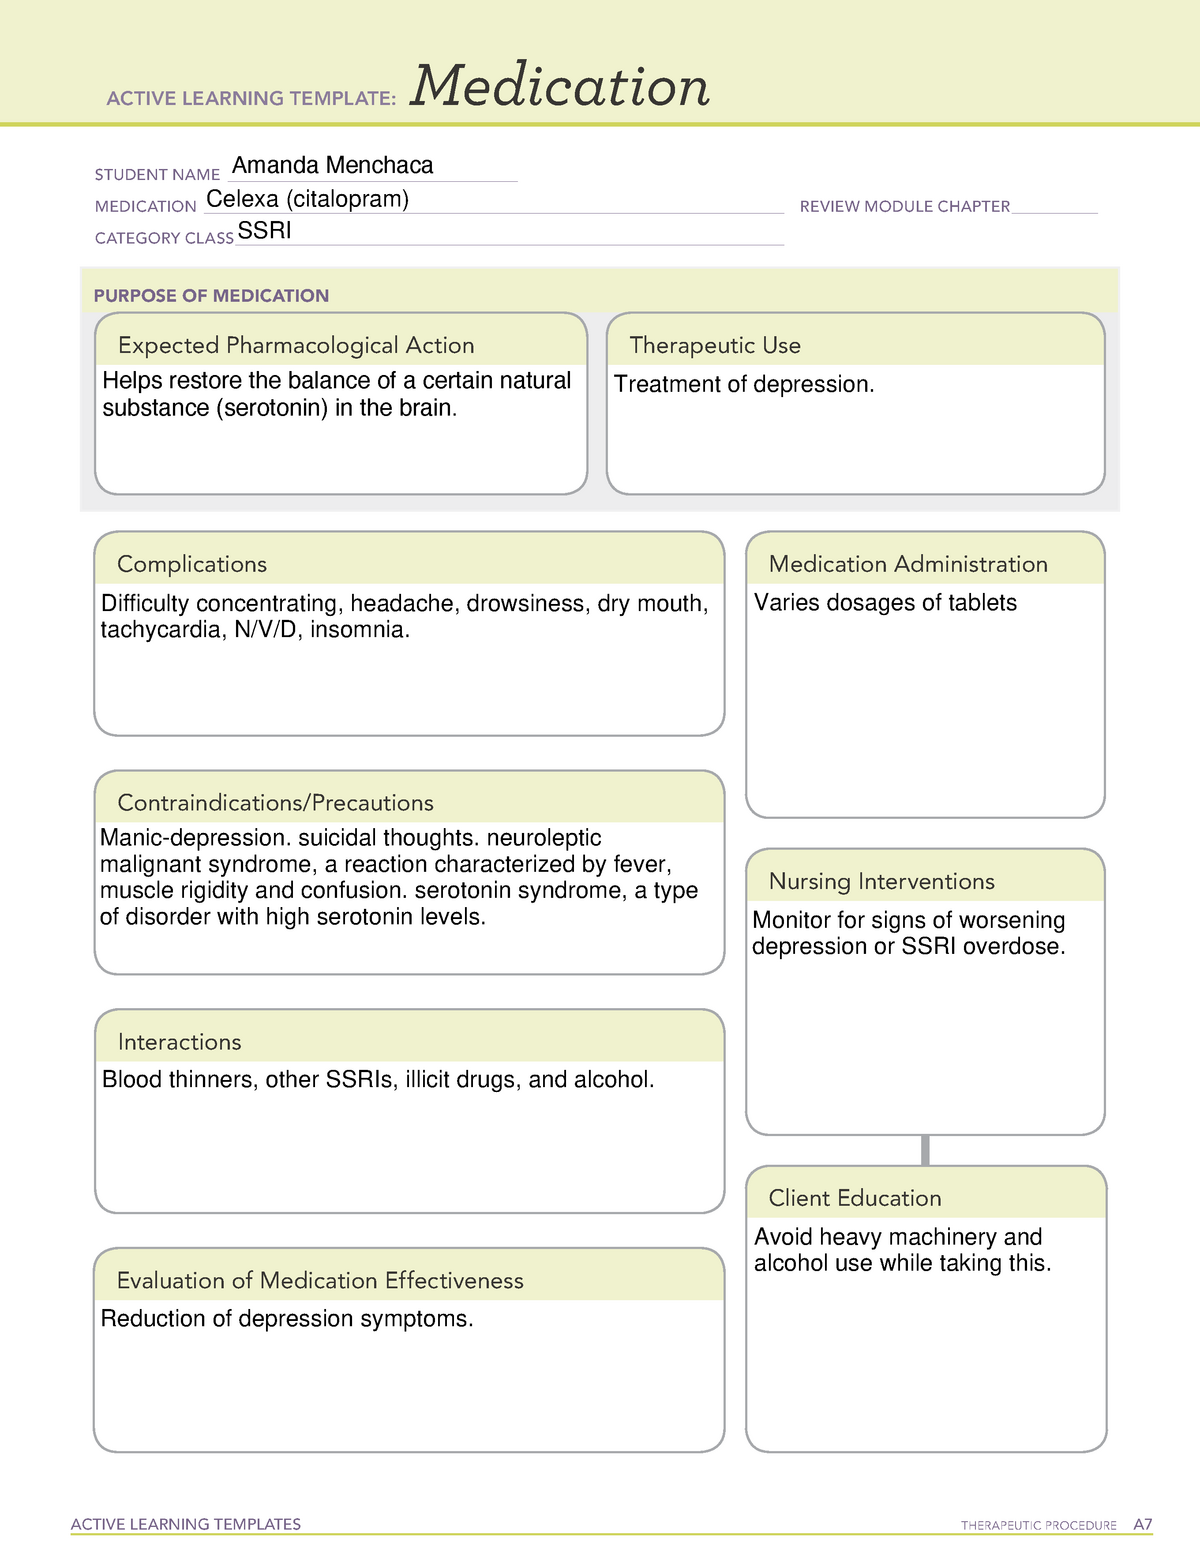 Celexa-MED - ATI medication card template - NUR24 - pharmacology Regarding Medication Card Template